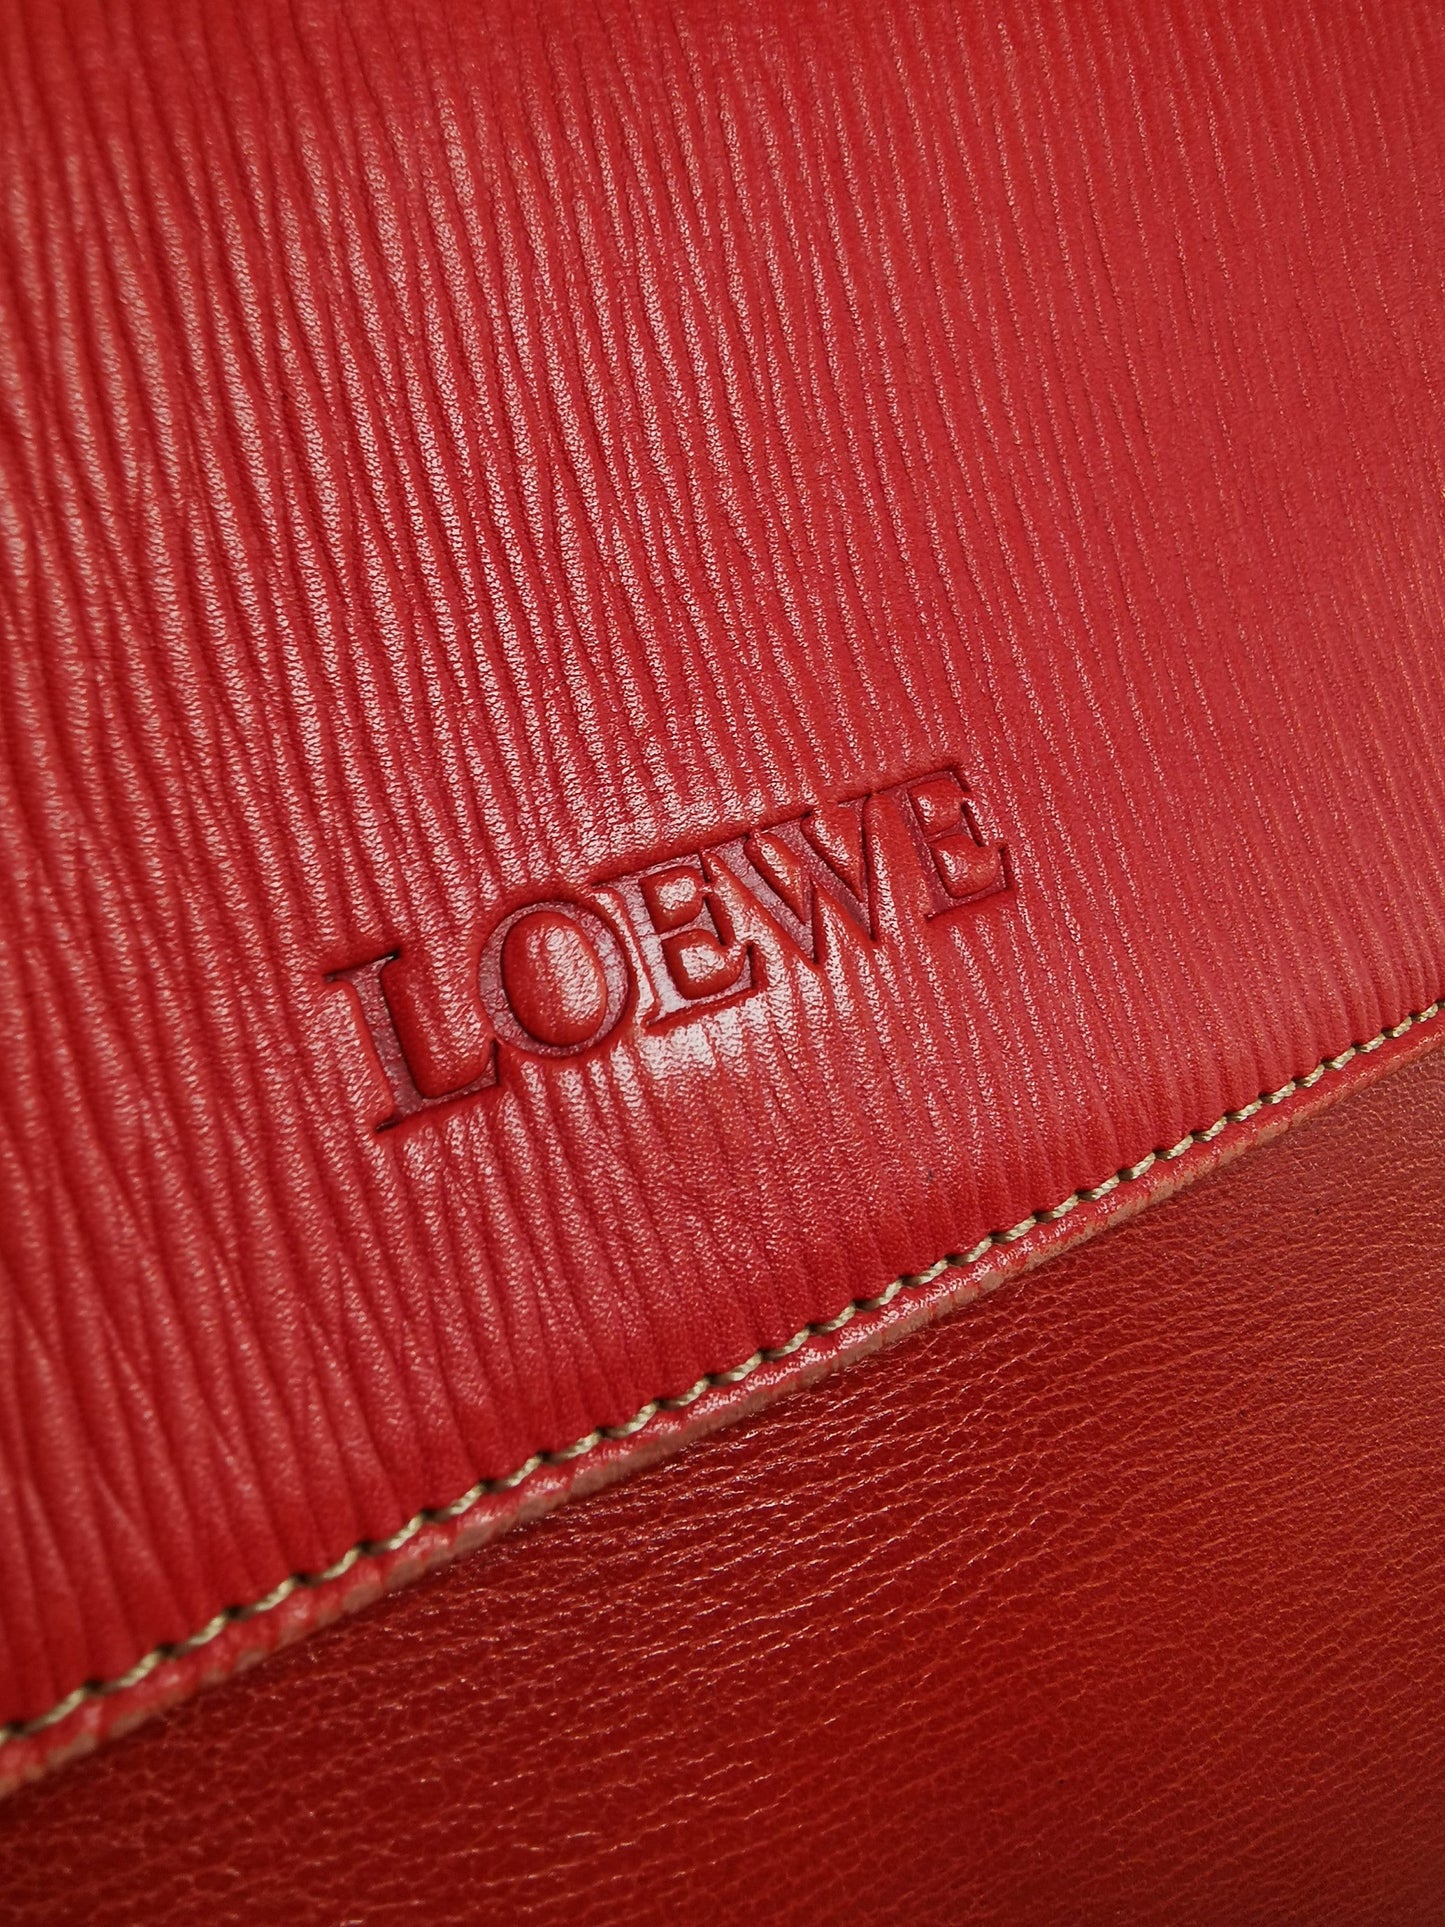 LOEWE VINTAGE 100% Authentic Genuine Top Handle Iconic Velazquez Two-way Bag, Orange, 1990's, Great Condition, Rare